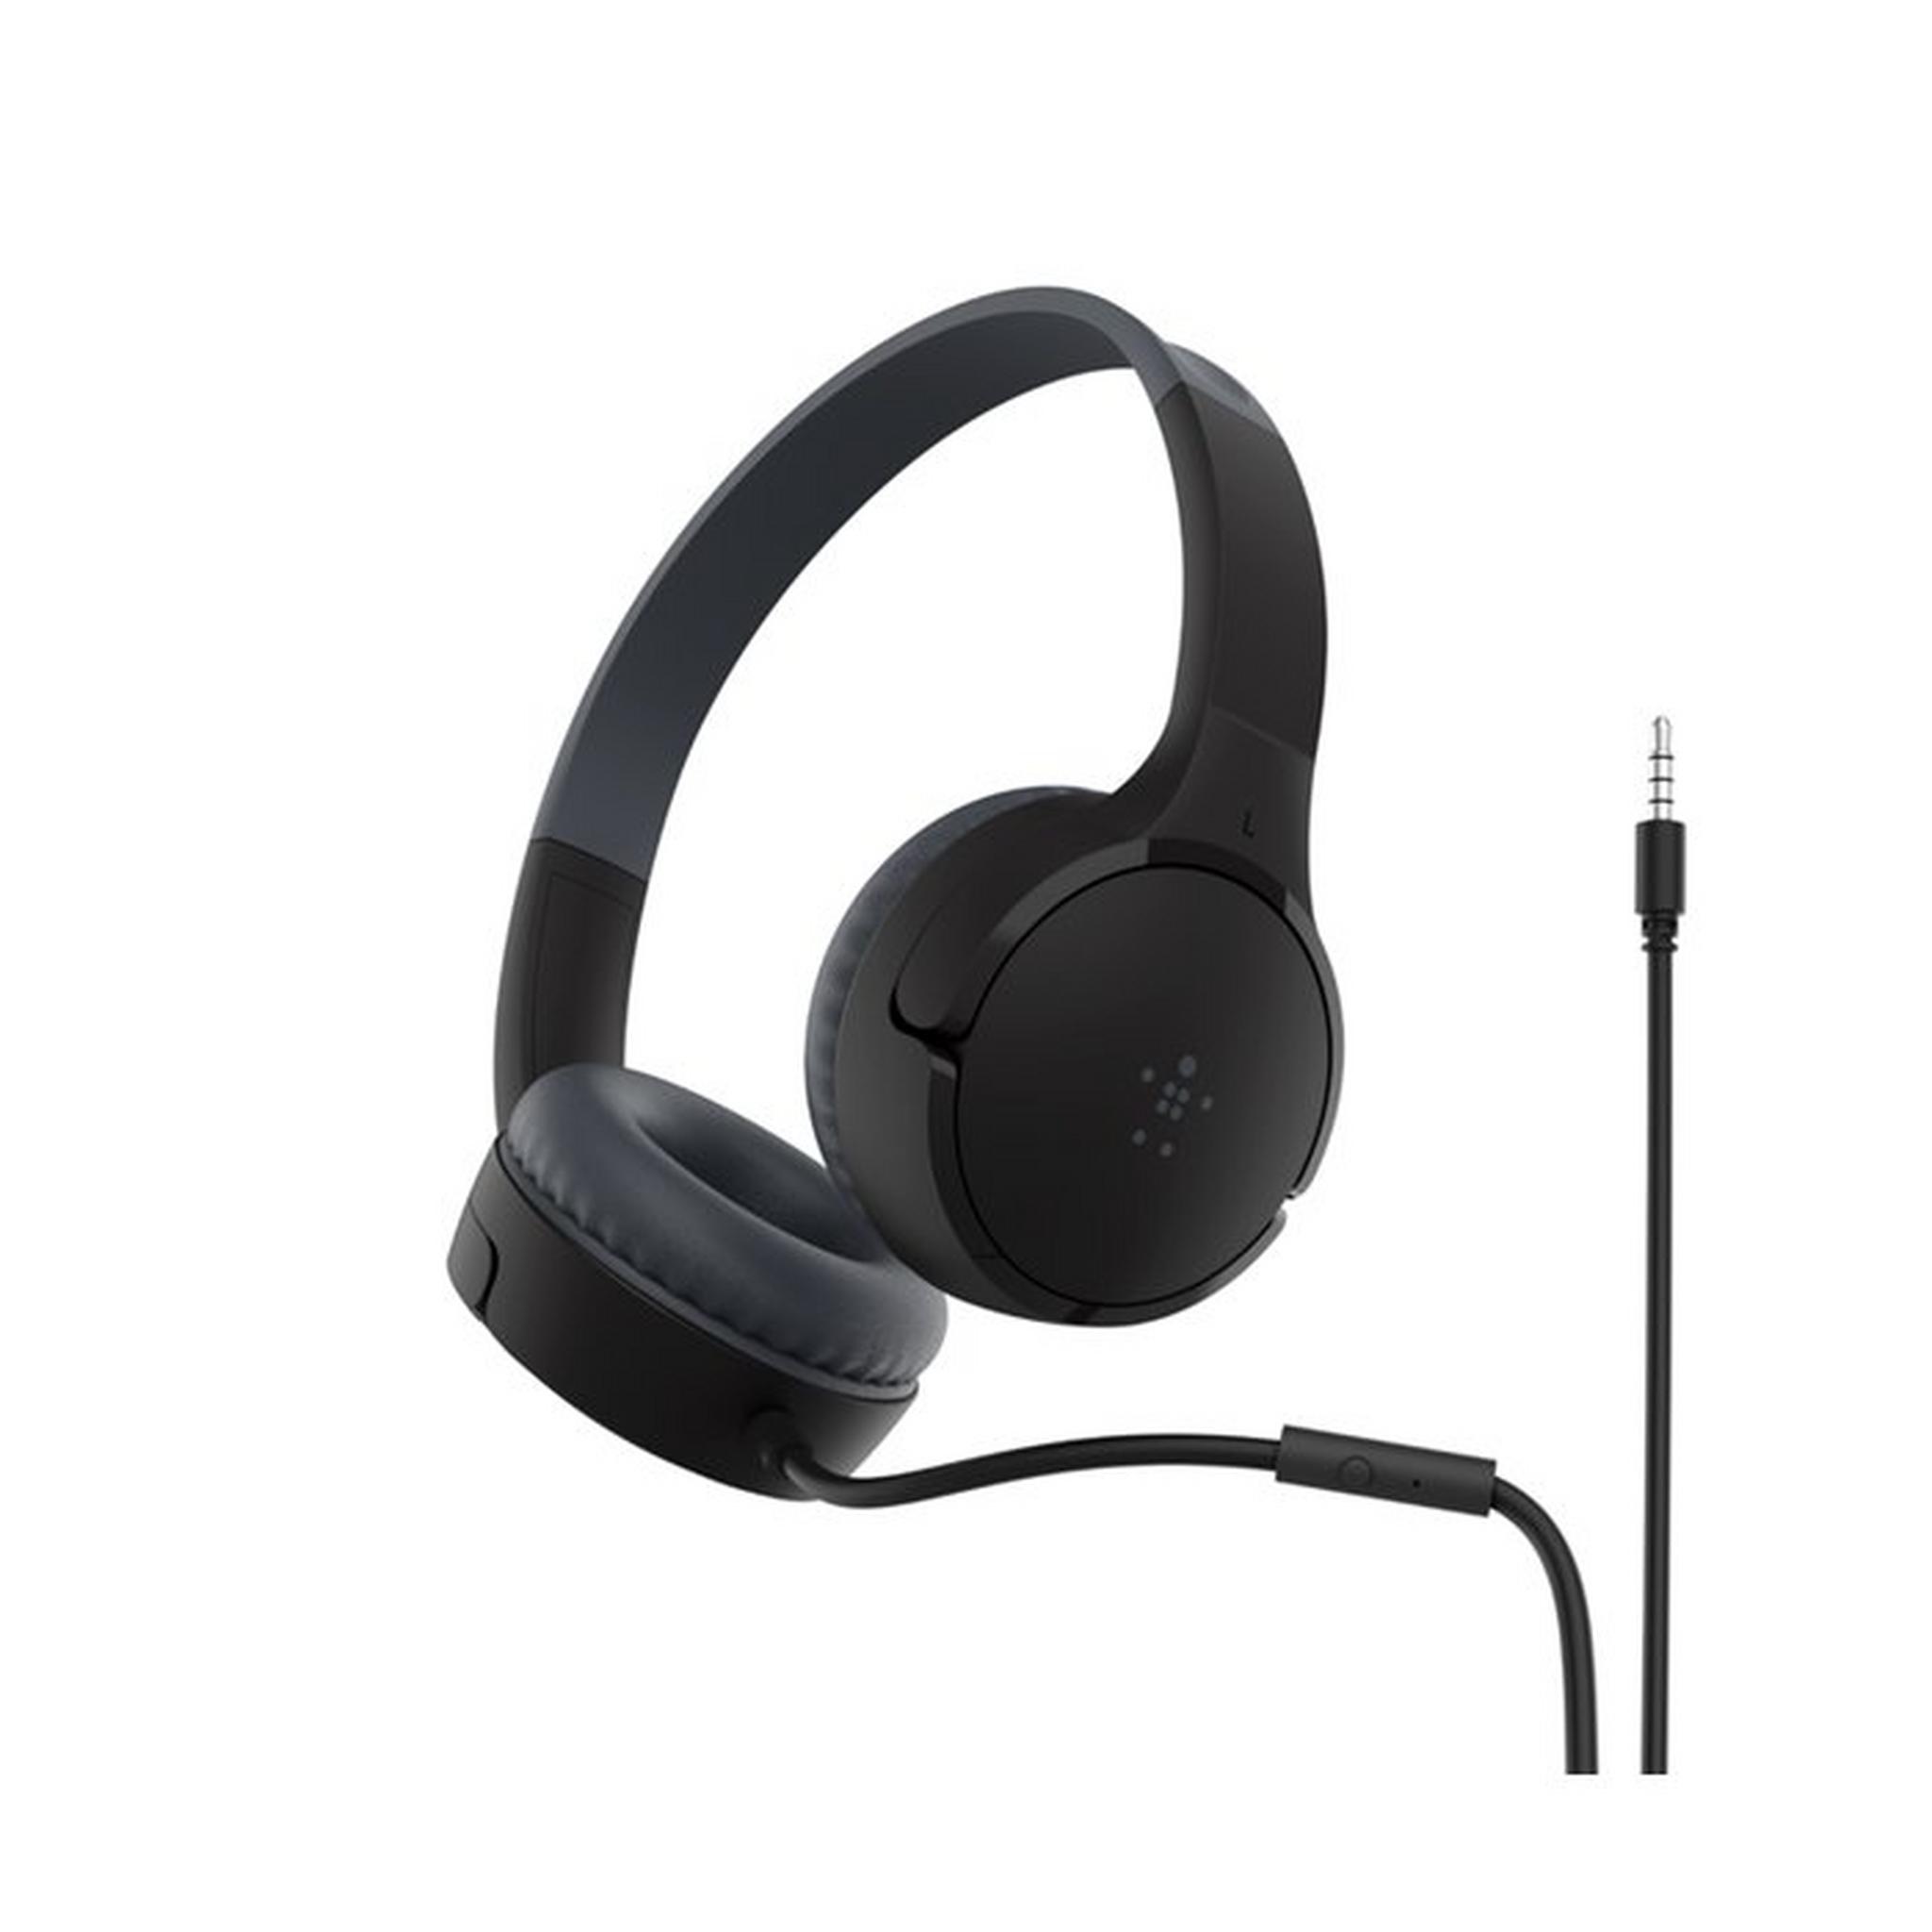 Belkin Soundform mini kids wired headphones, AUD004btBK - Black